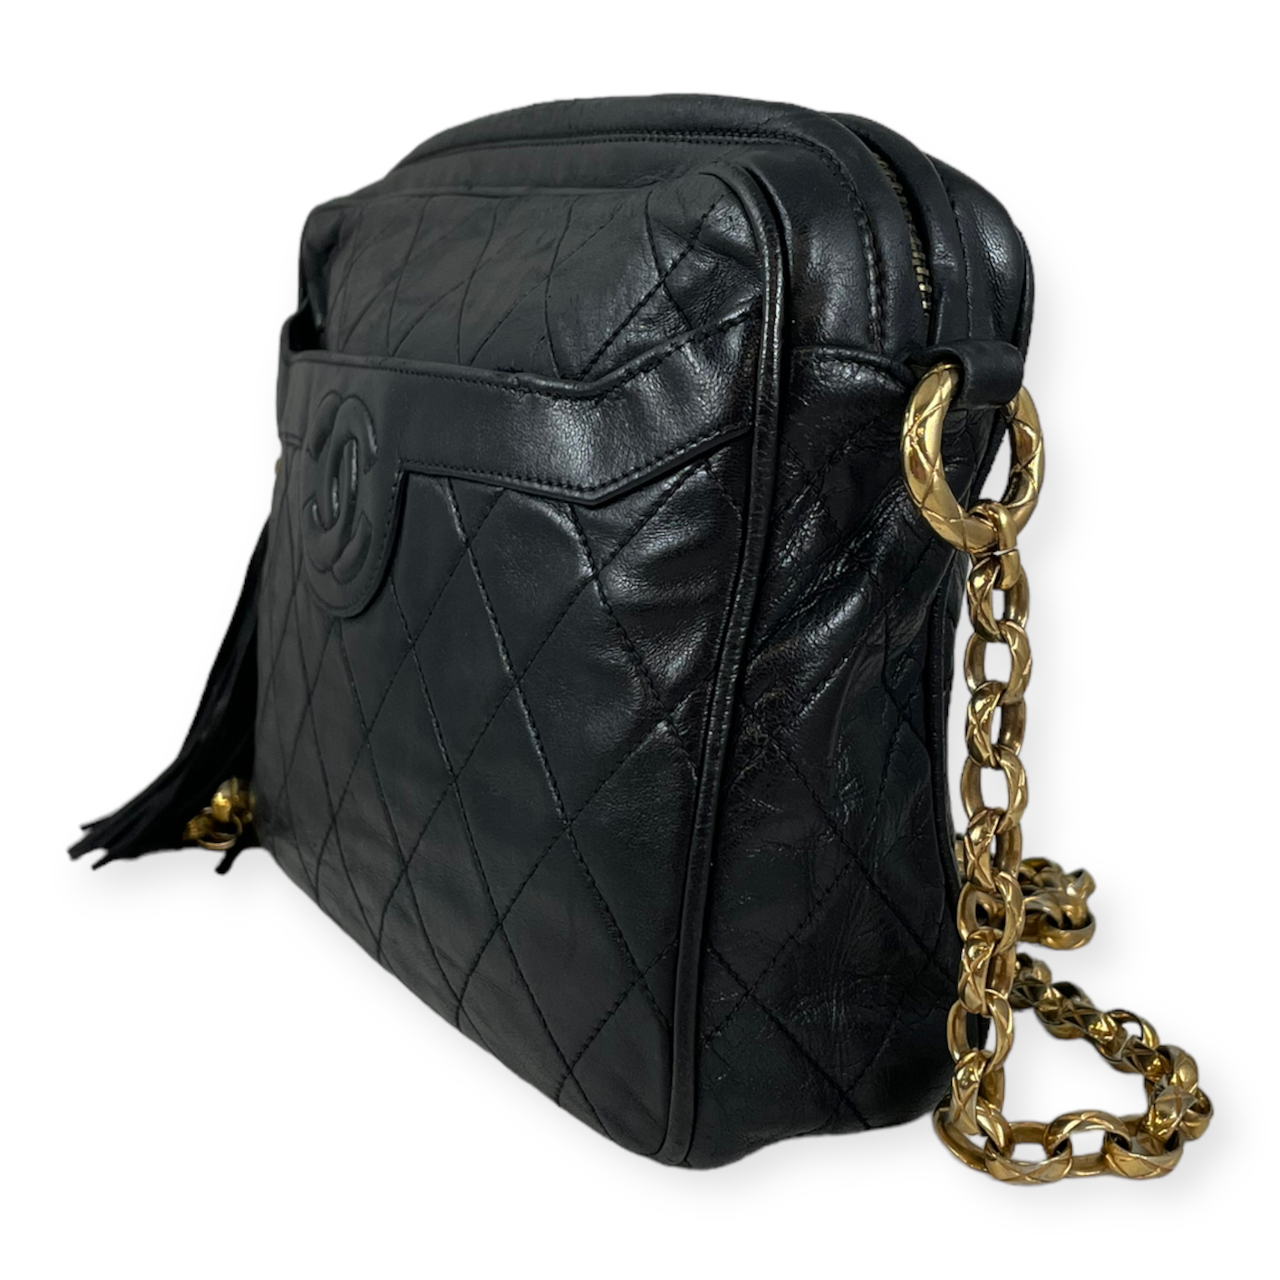 Chanel Vintage Tassel Camera Bag in Black | MTYCI